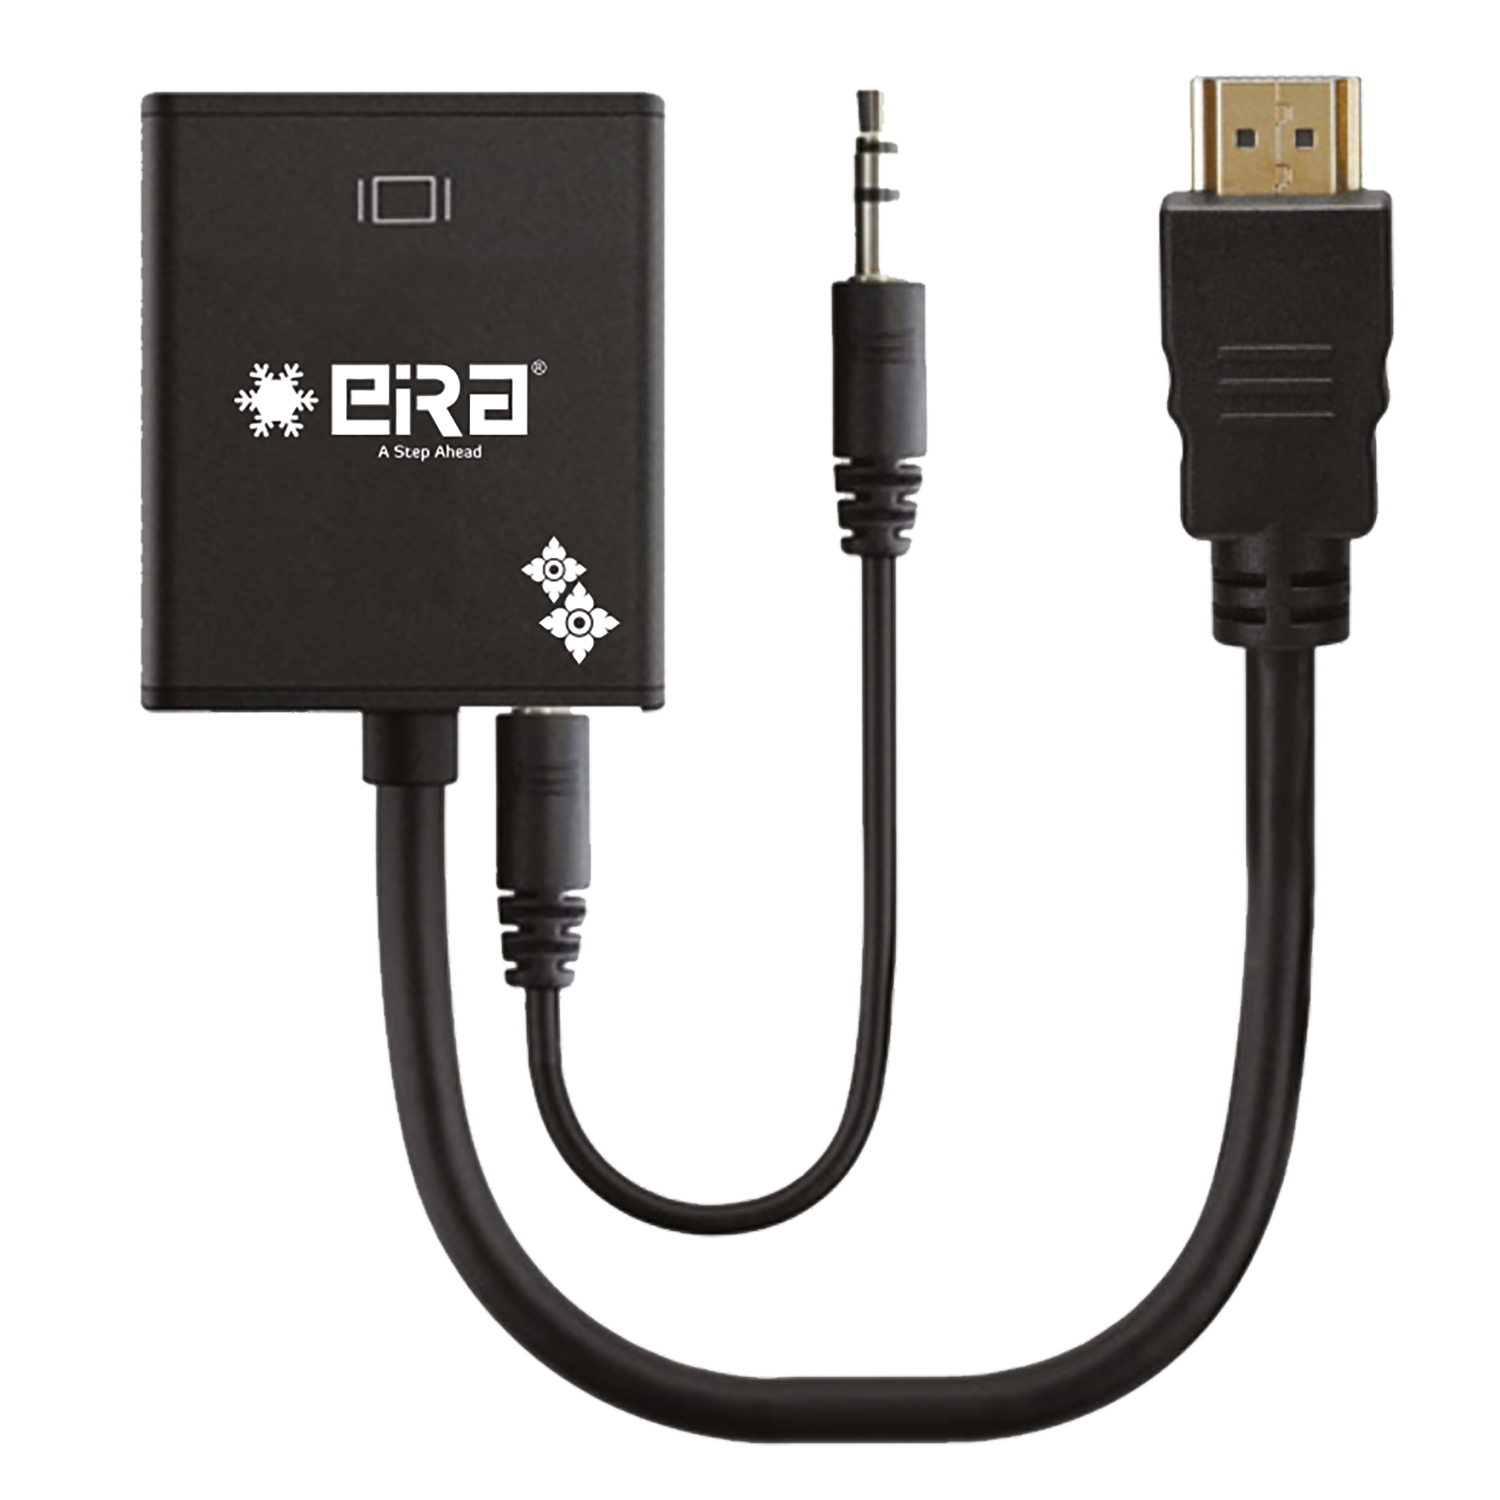 VGA to HDMI Converter with USB Audio – Black (VGAHDMI)